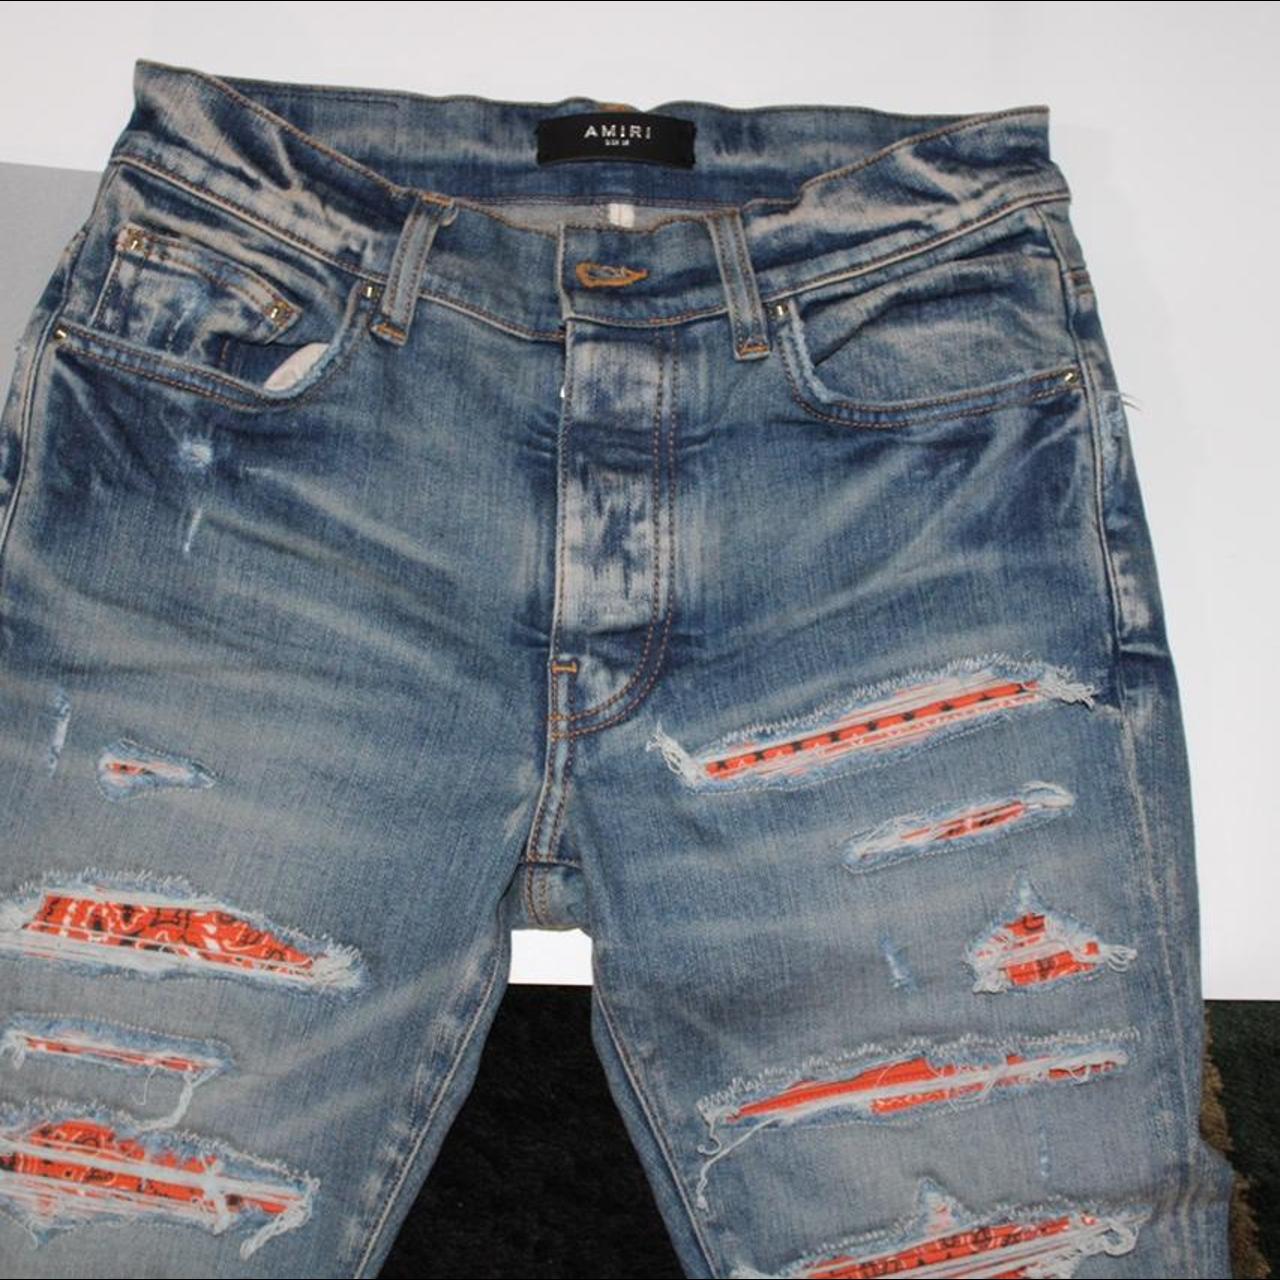 Product Image 1 - Amiri bandana skinny jeans

Details
Inseam: 34"
Rise: